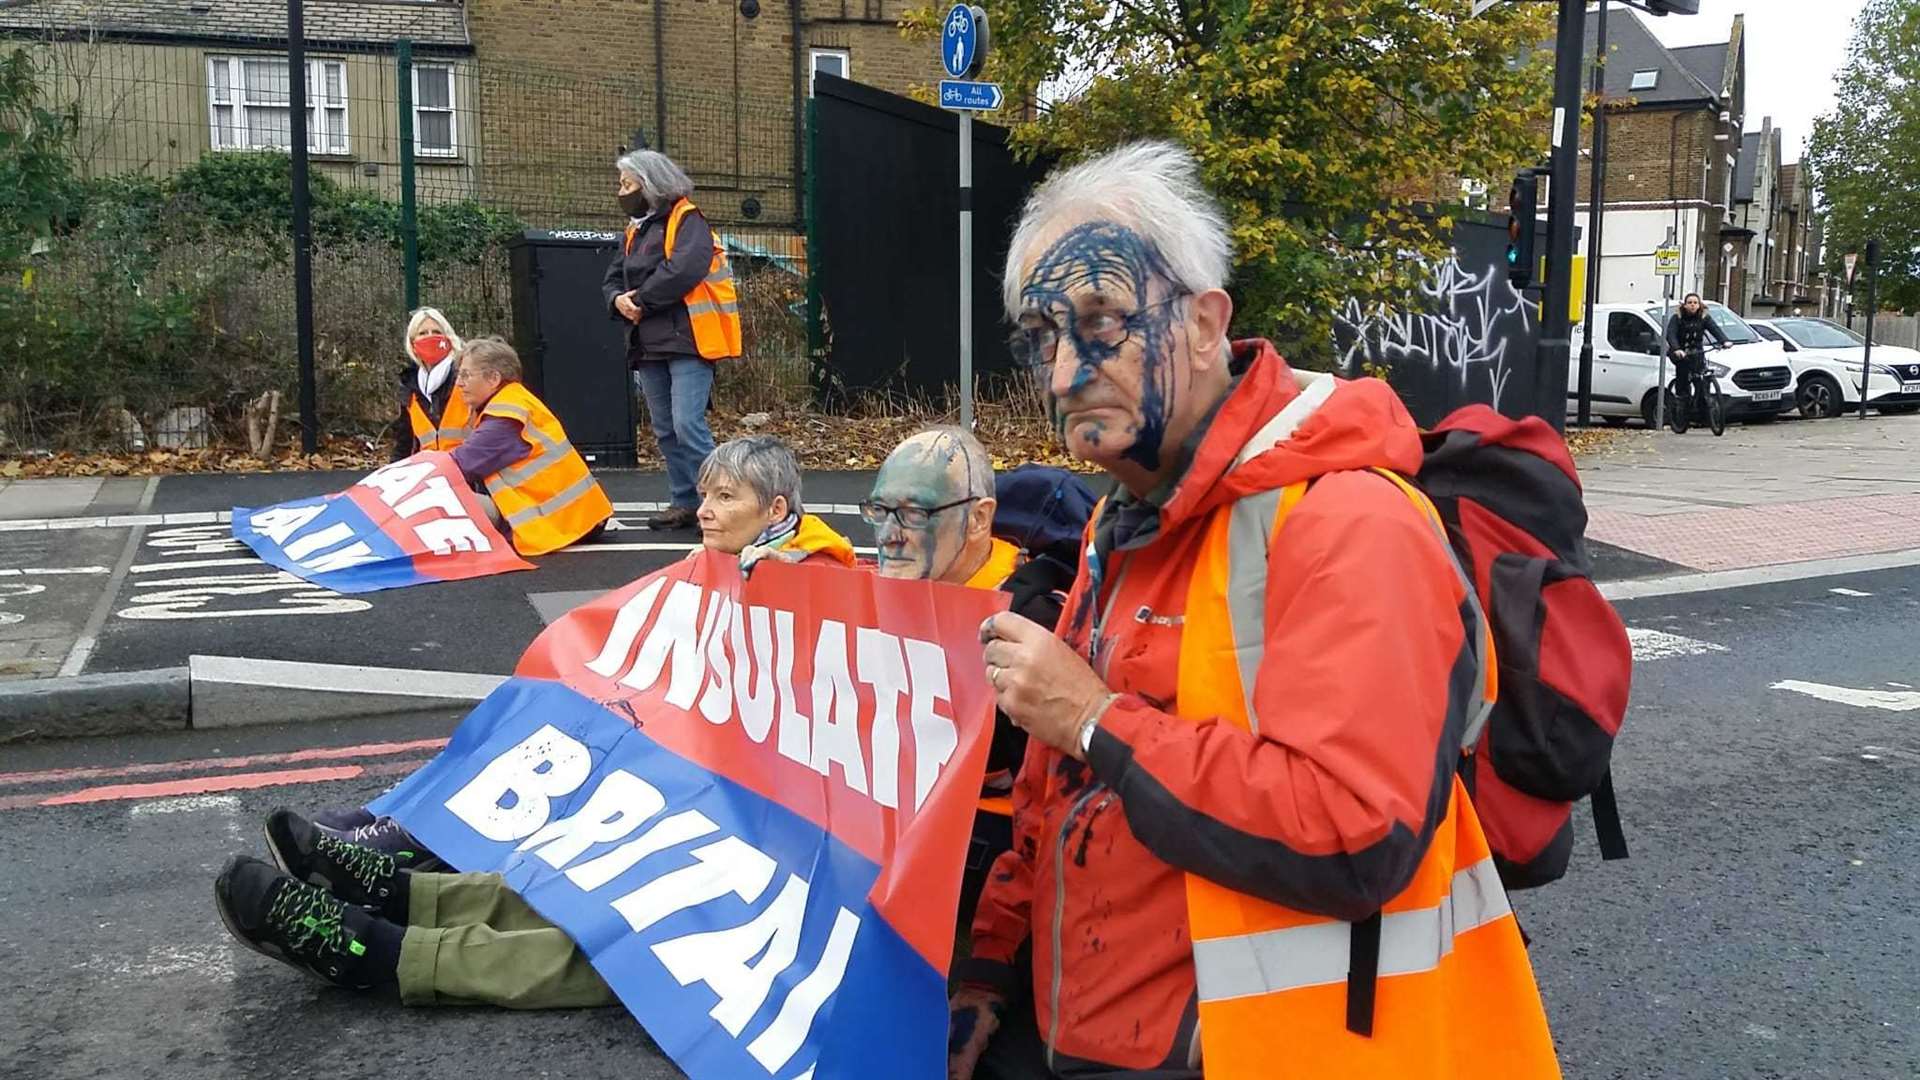 Insulate Britain have also blocked roads in central London. Photo: Insulate Britain (52679162)